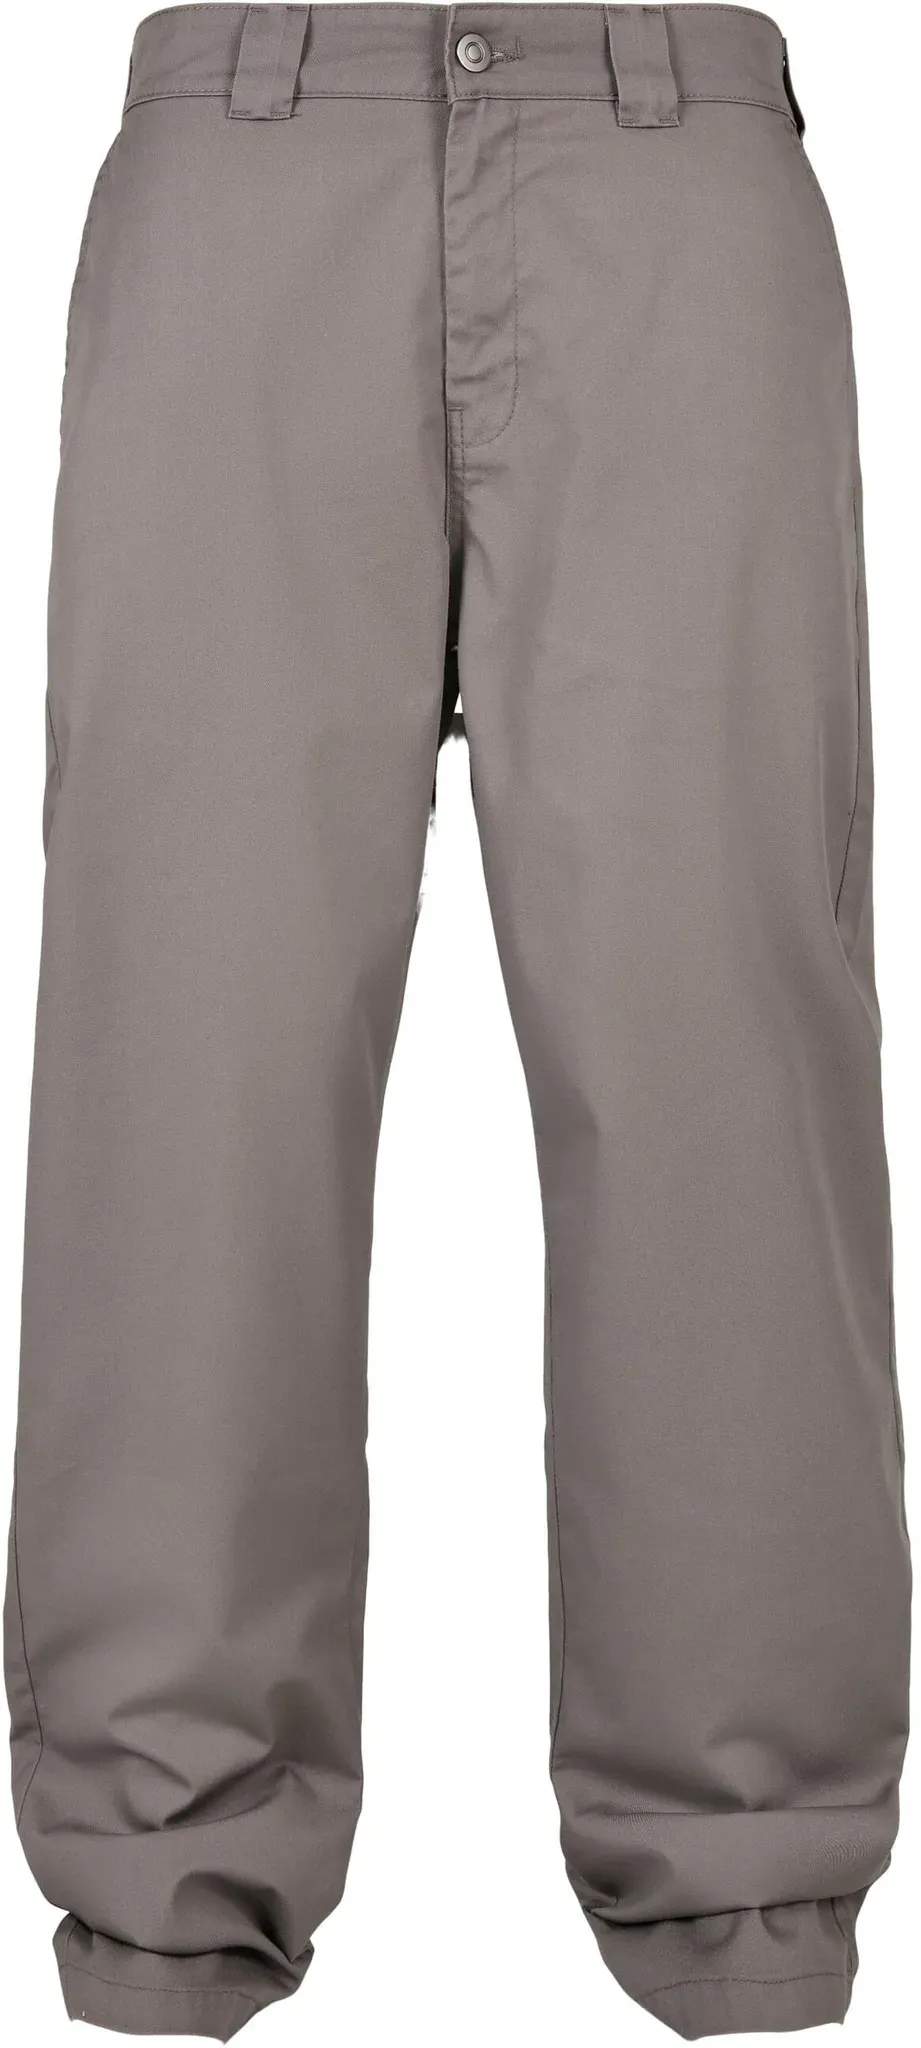 Stoffhose URBAN CLASSICS "Urban Classics Herren Classic Workwear Pants" Gr. 42, Normalgrößen, grau (asphalt) Herren Hosen Stoffhosen